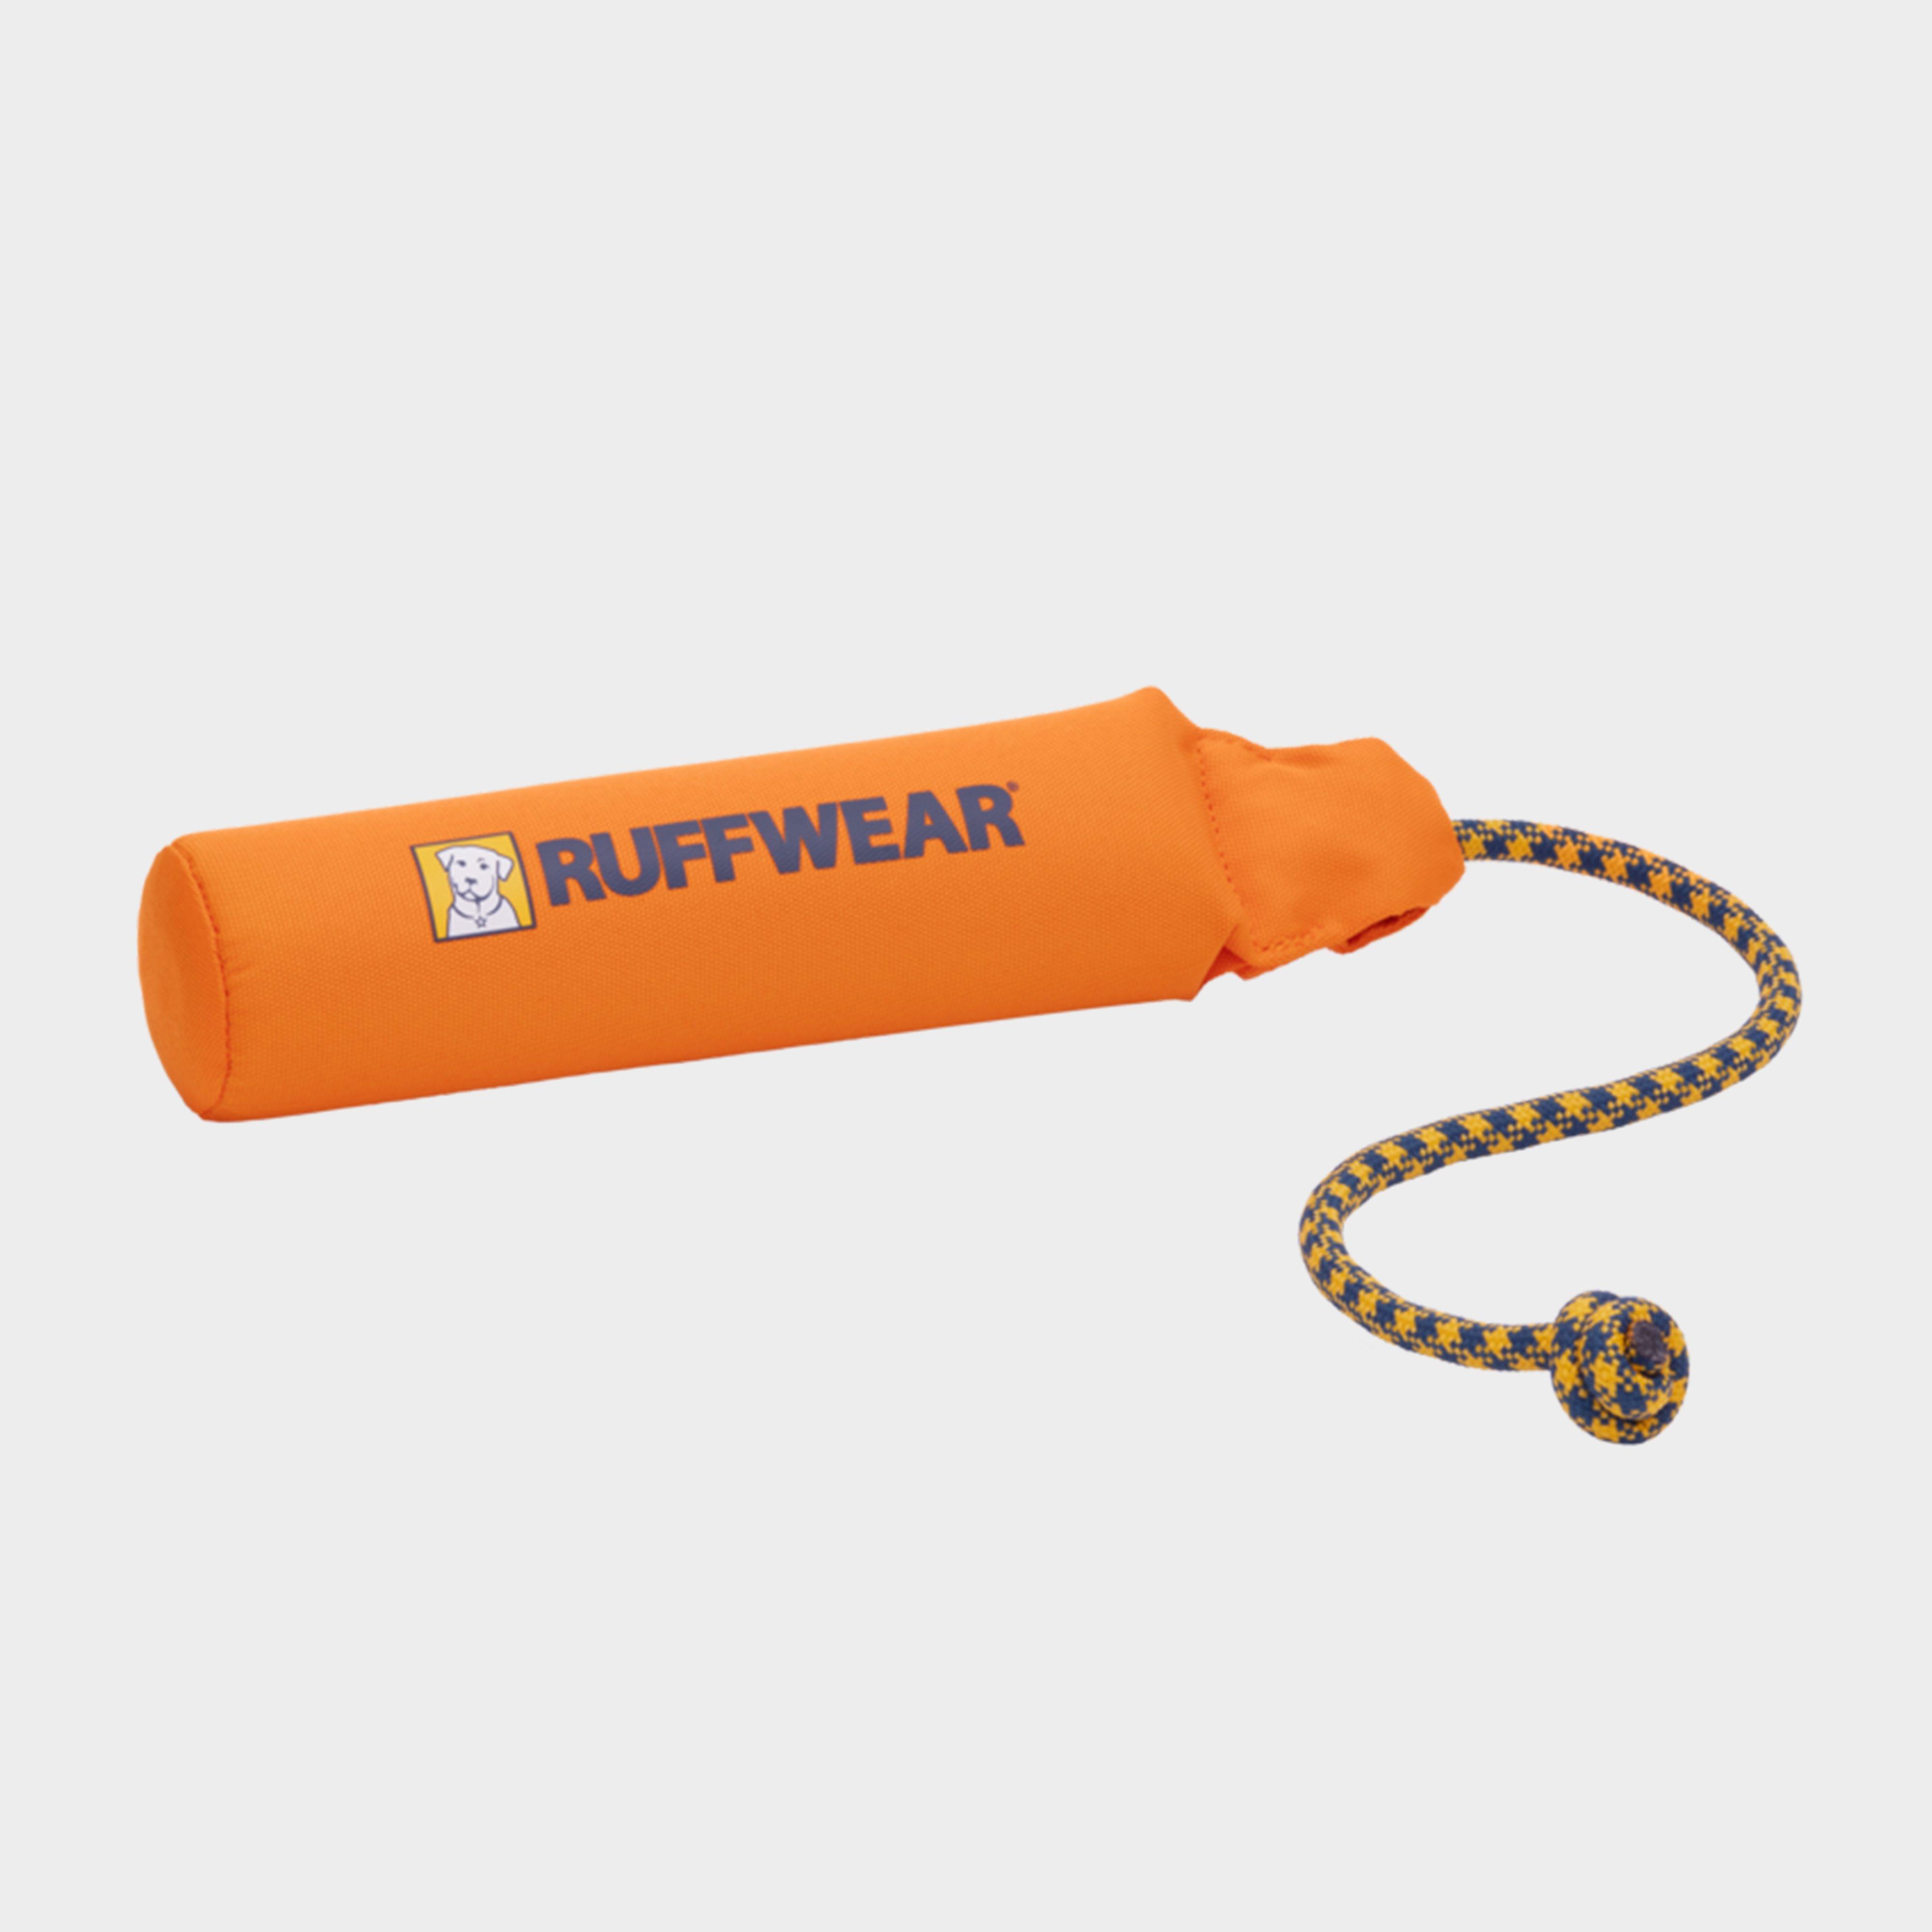 Ruffwear Lunker Floating Throw Toy, Orange